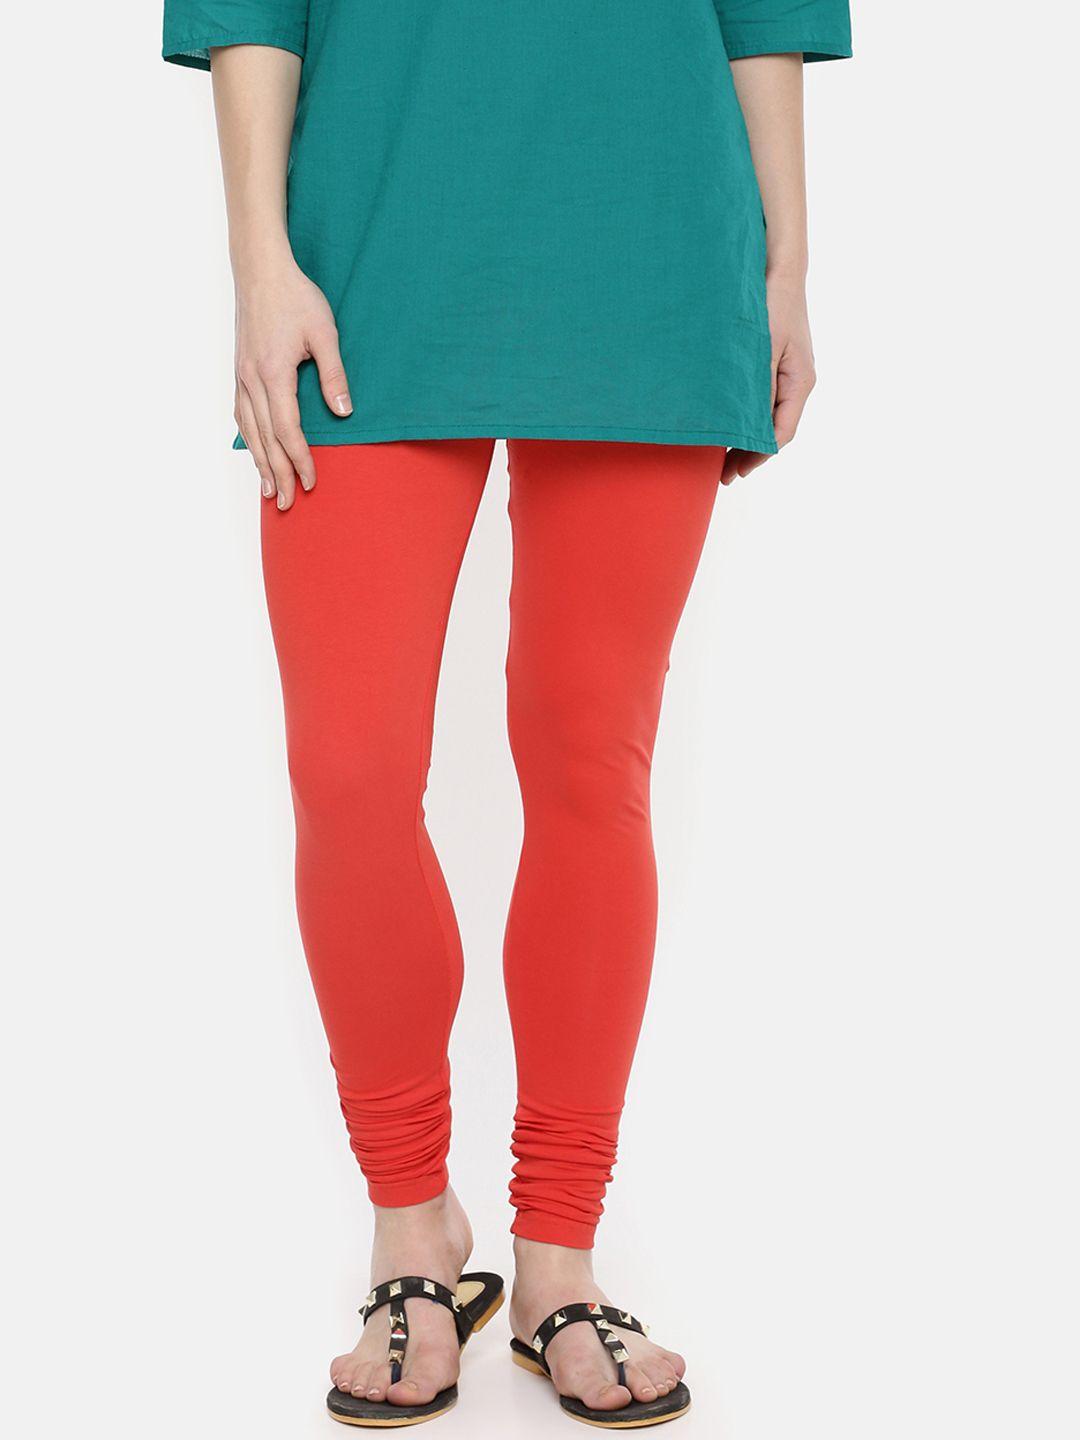 dollar missy women red churidar length  leggings